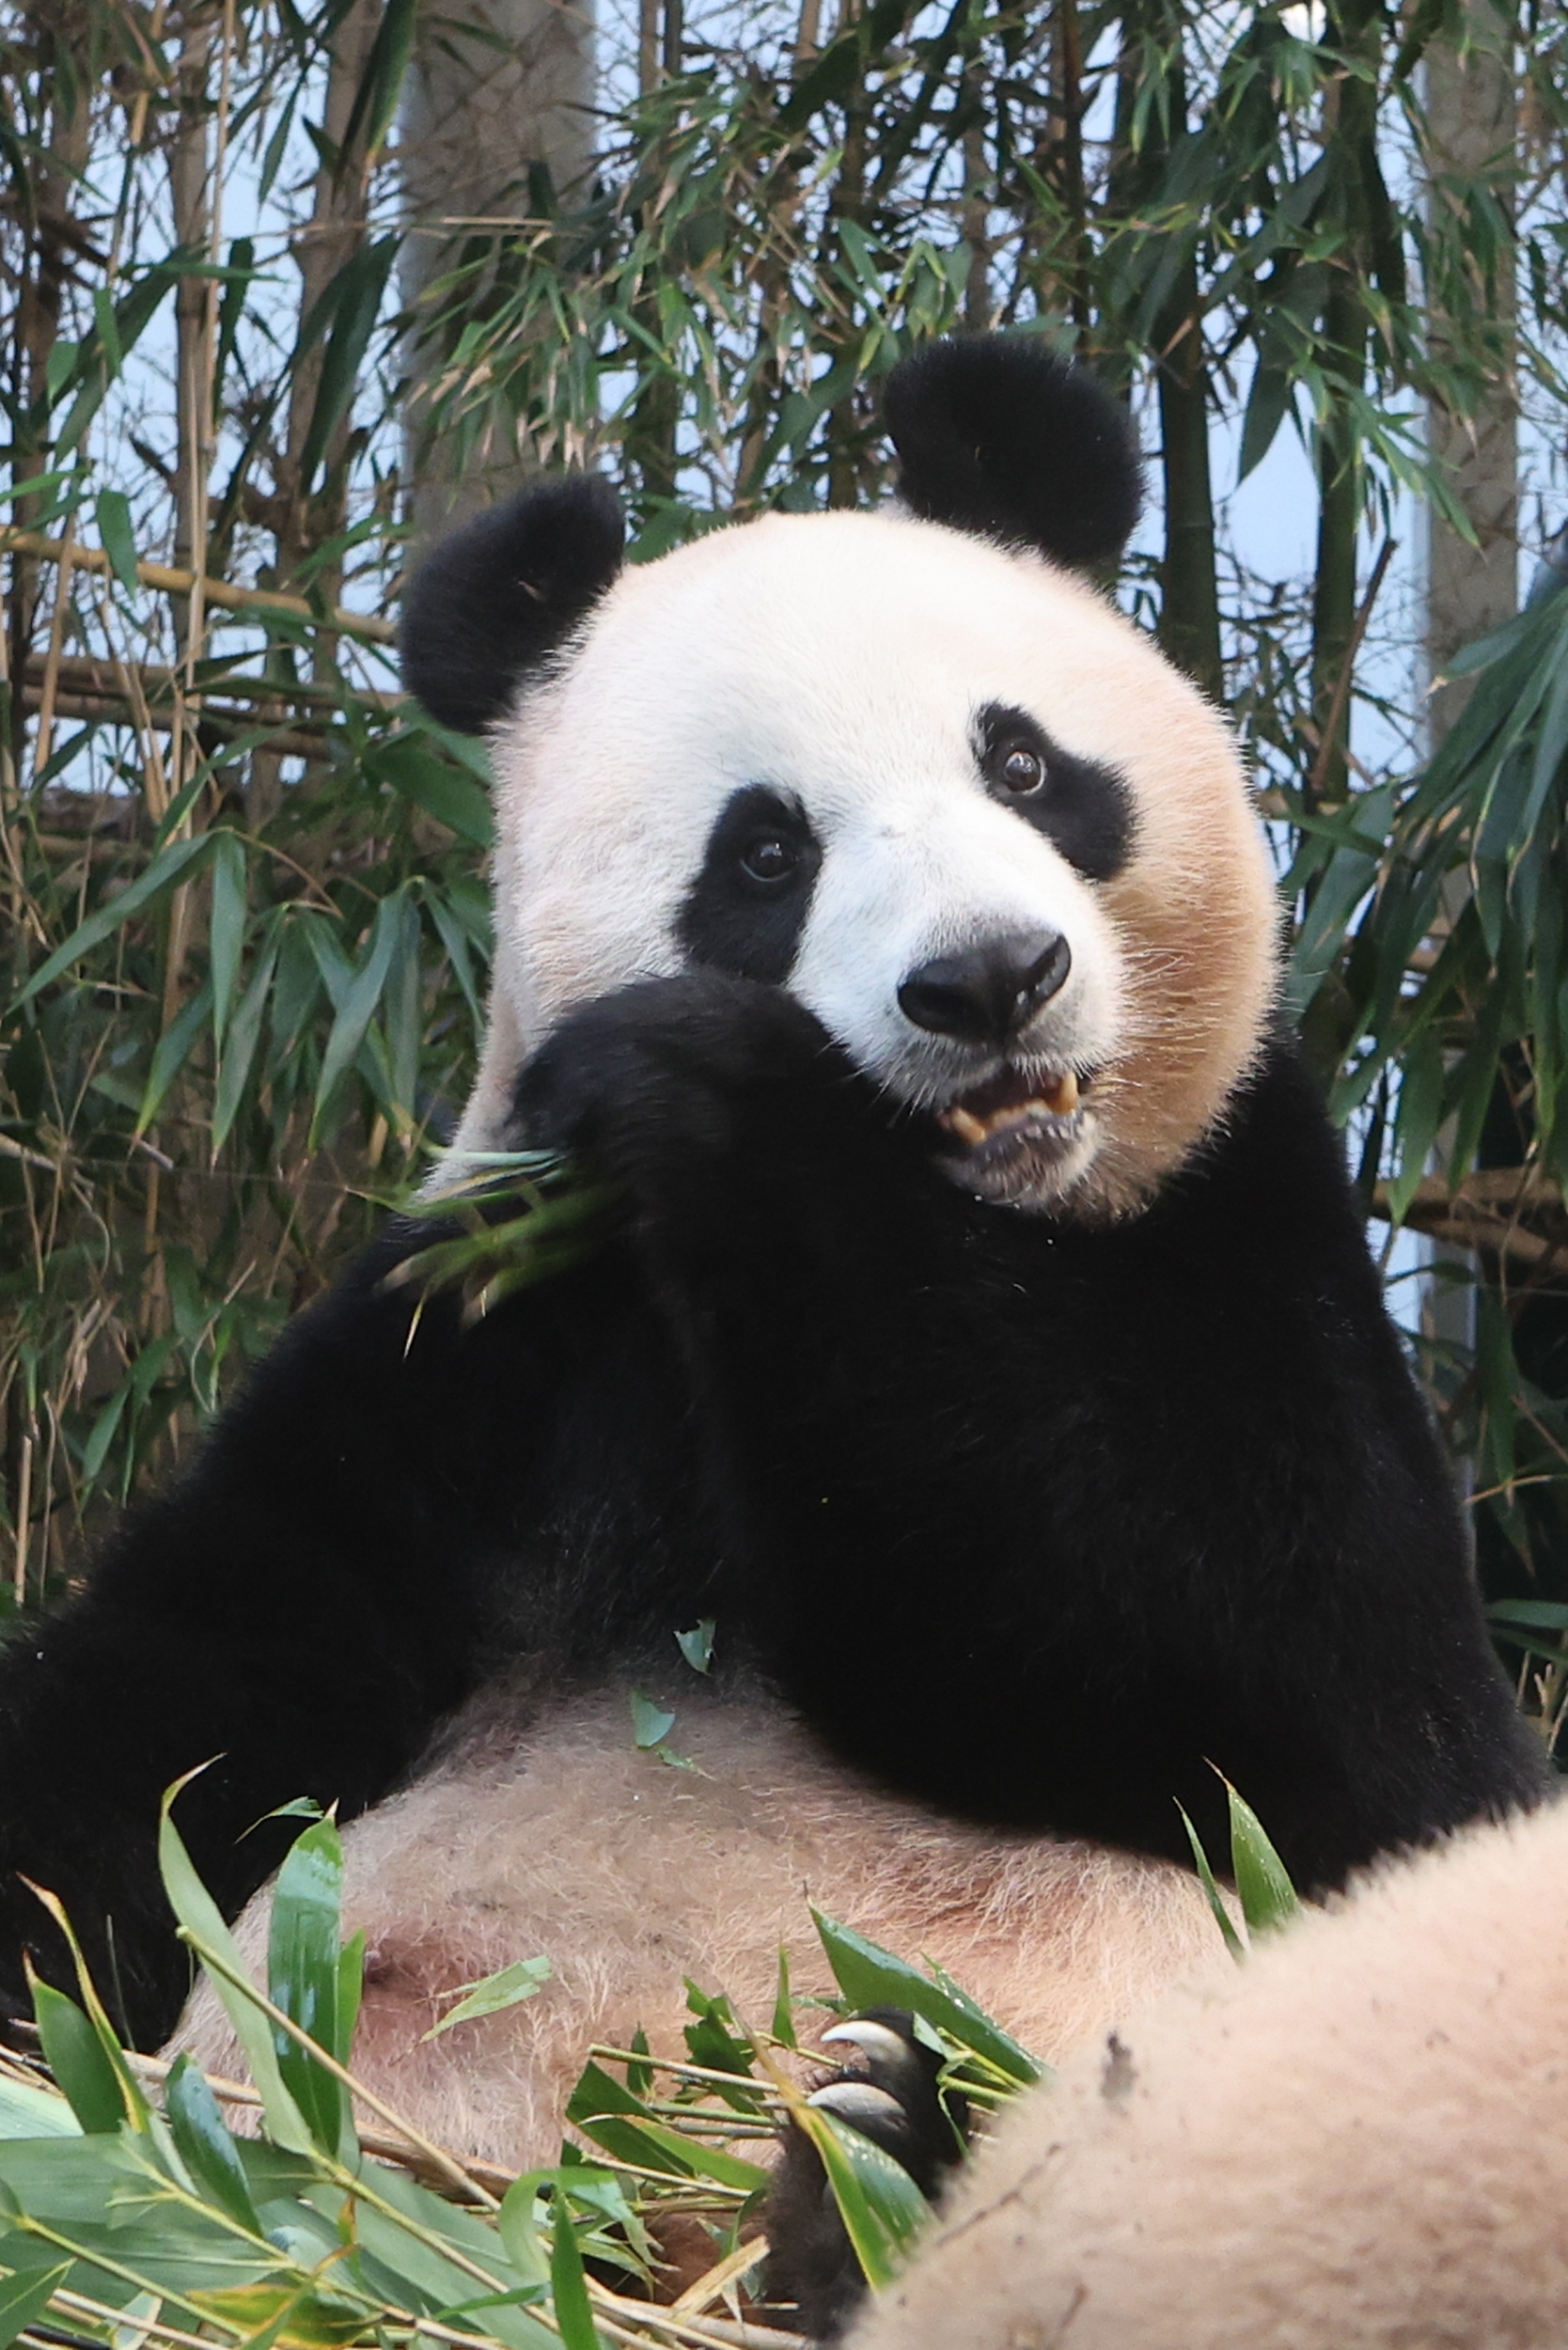 “Yum, more bamboo, please!”